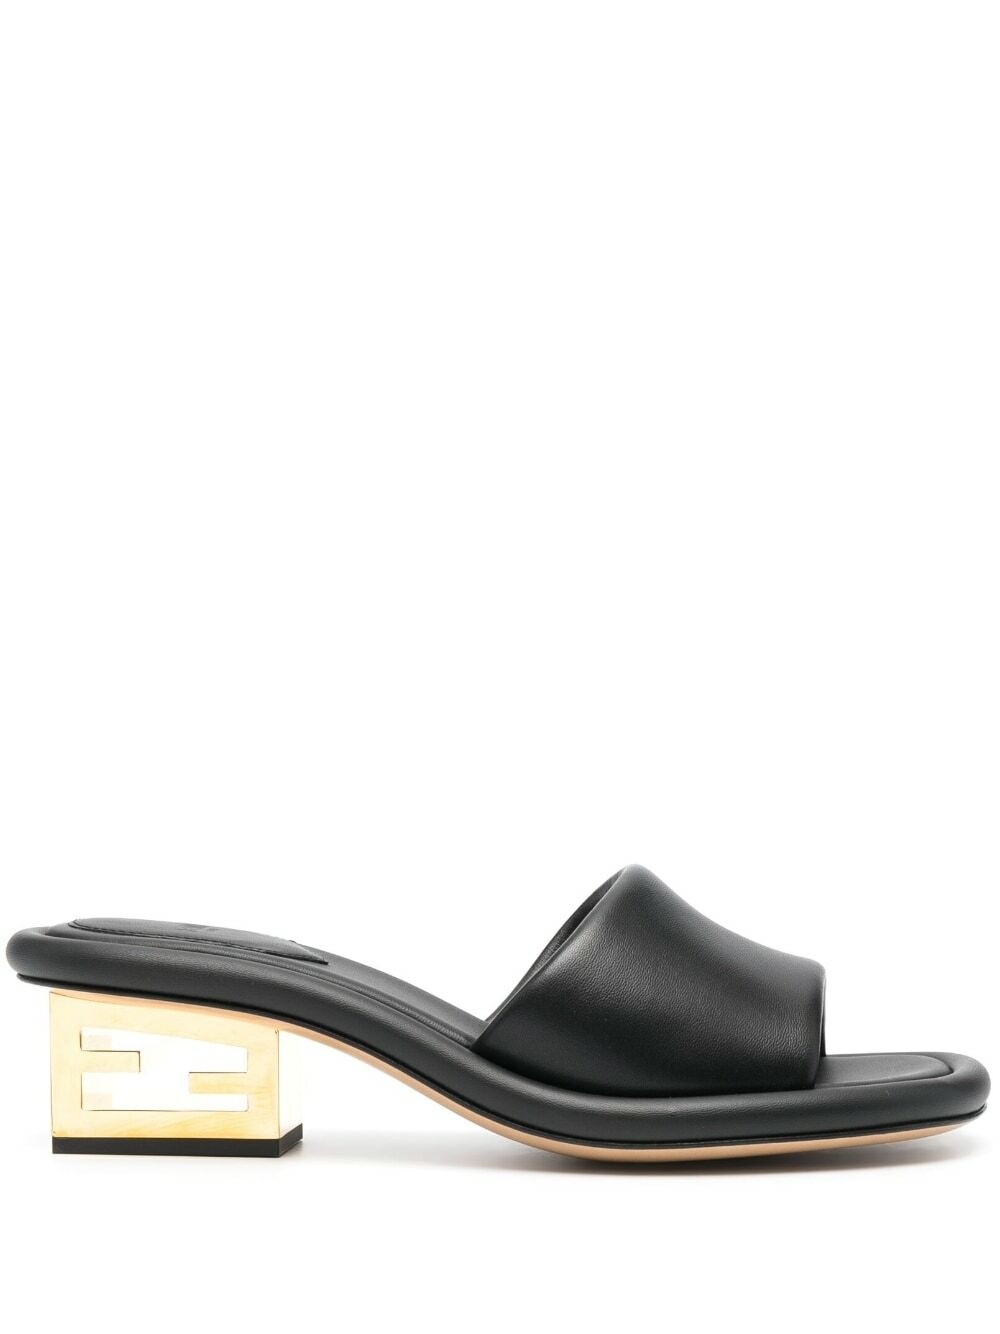 FENDI - Baguette Leather Sandals Fendi